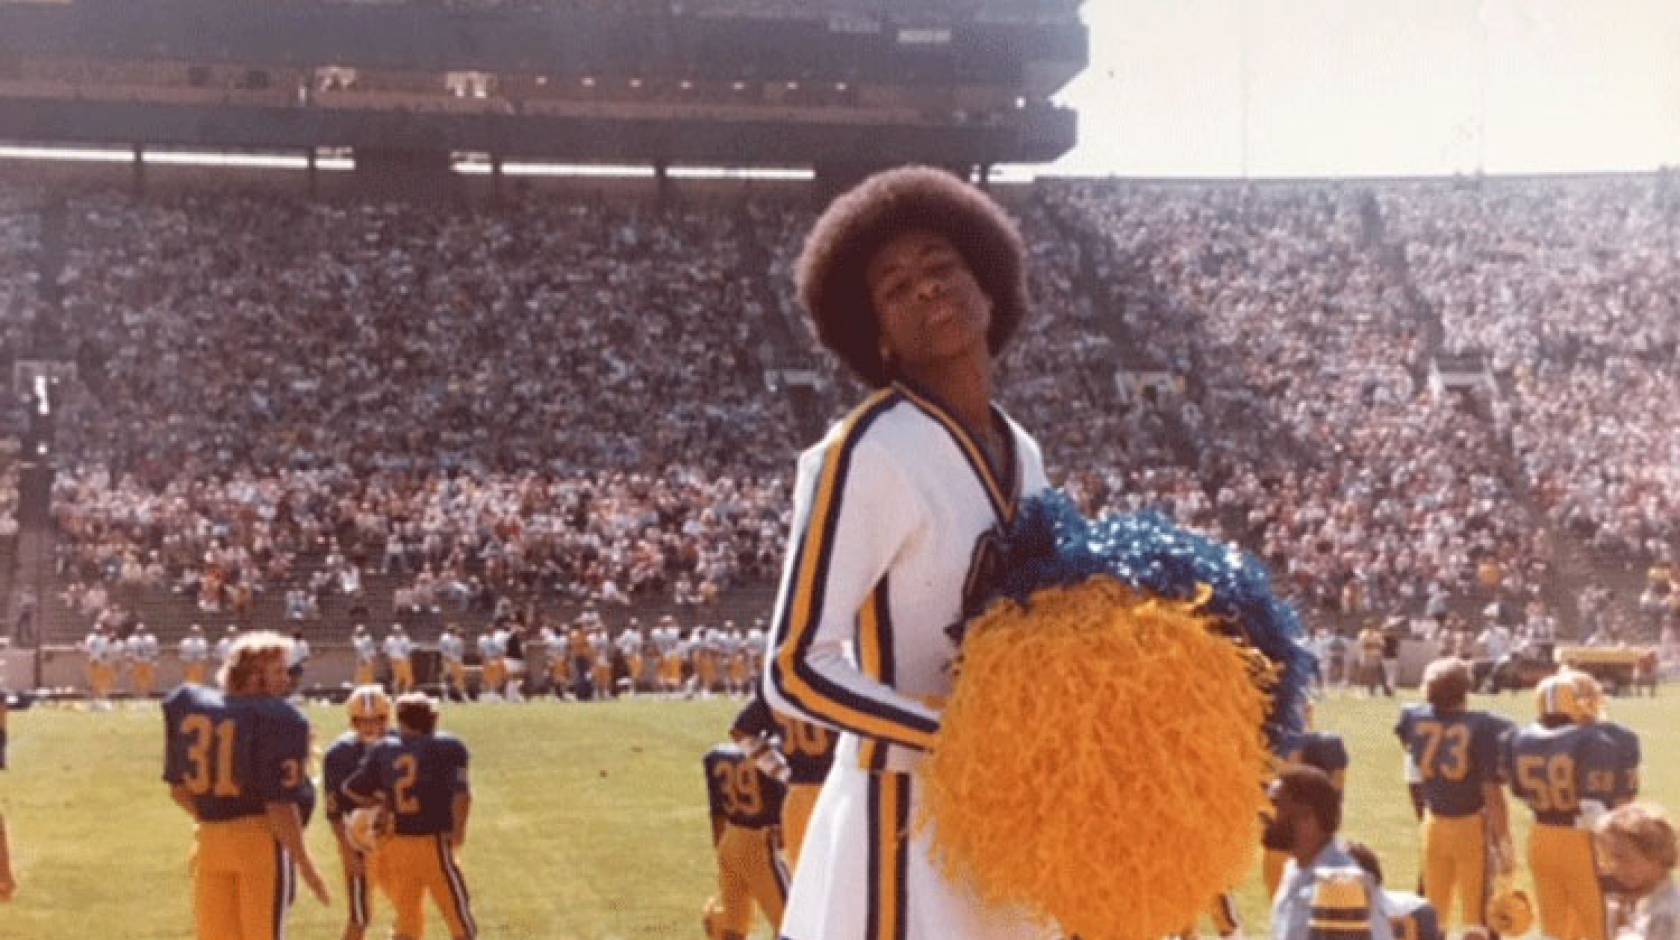 Cynthia Marshall, as a U C Berkeley cheerleader in the late 1980s